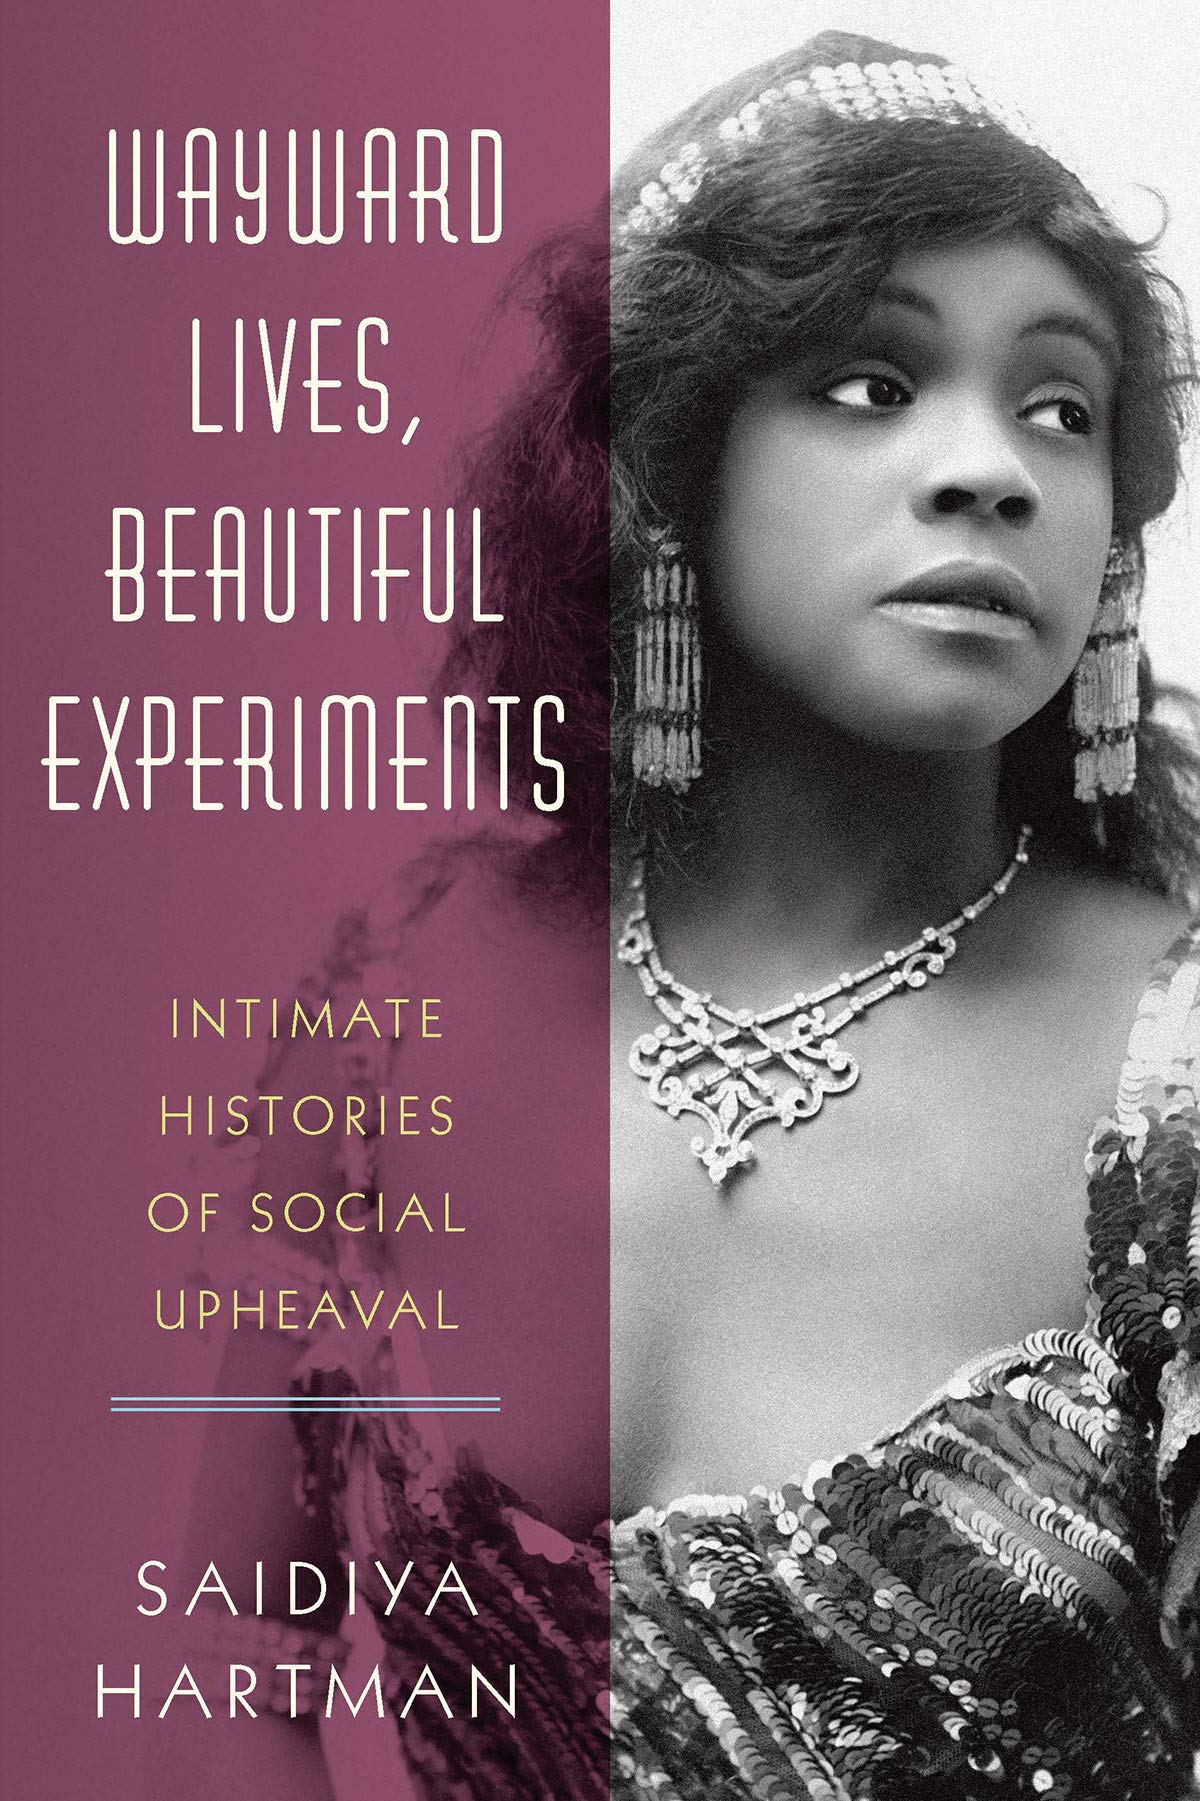 Wayward Lives, Beautiful Experiments: Intimate Histories of Social Upheaval by Saidiya Hartman